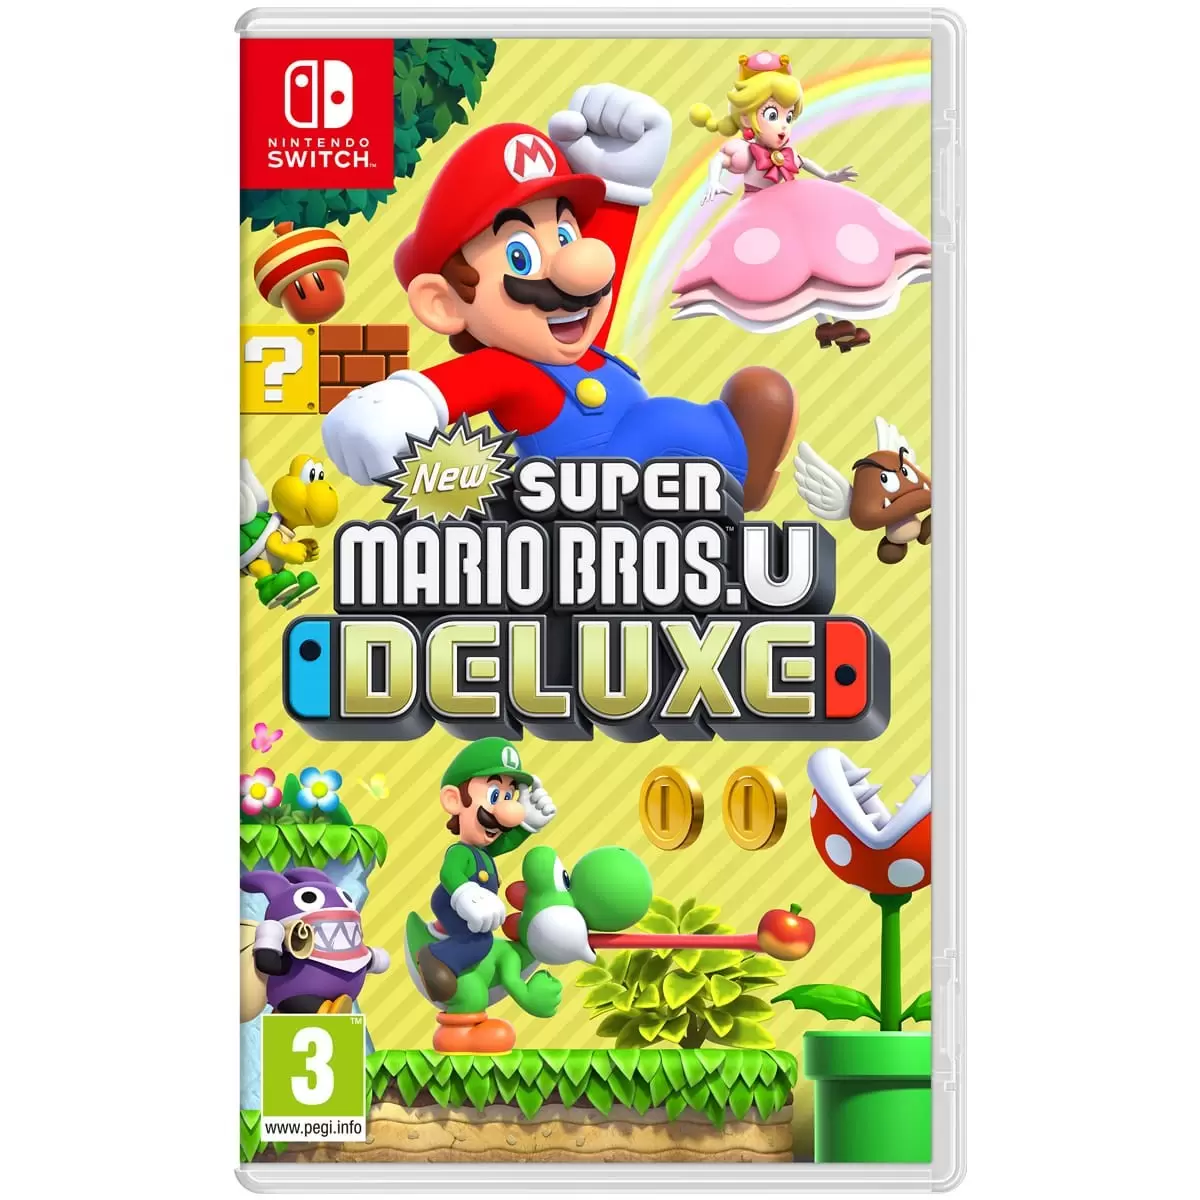 Nintendo Switch Games - New Super Mario Bros. U Deluxe